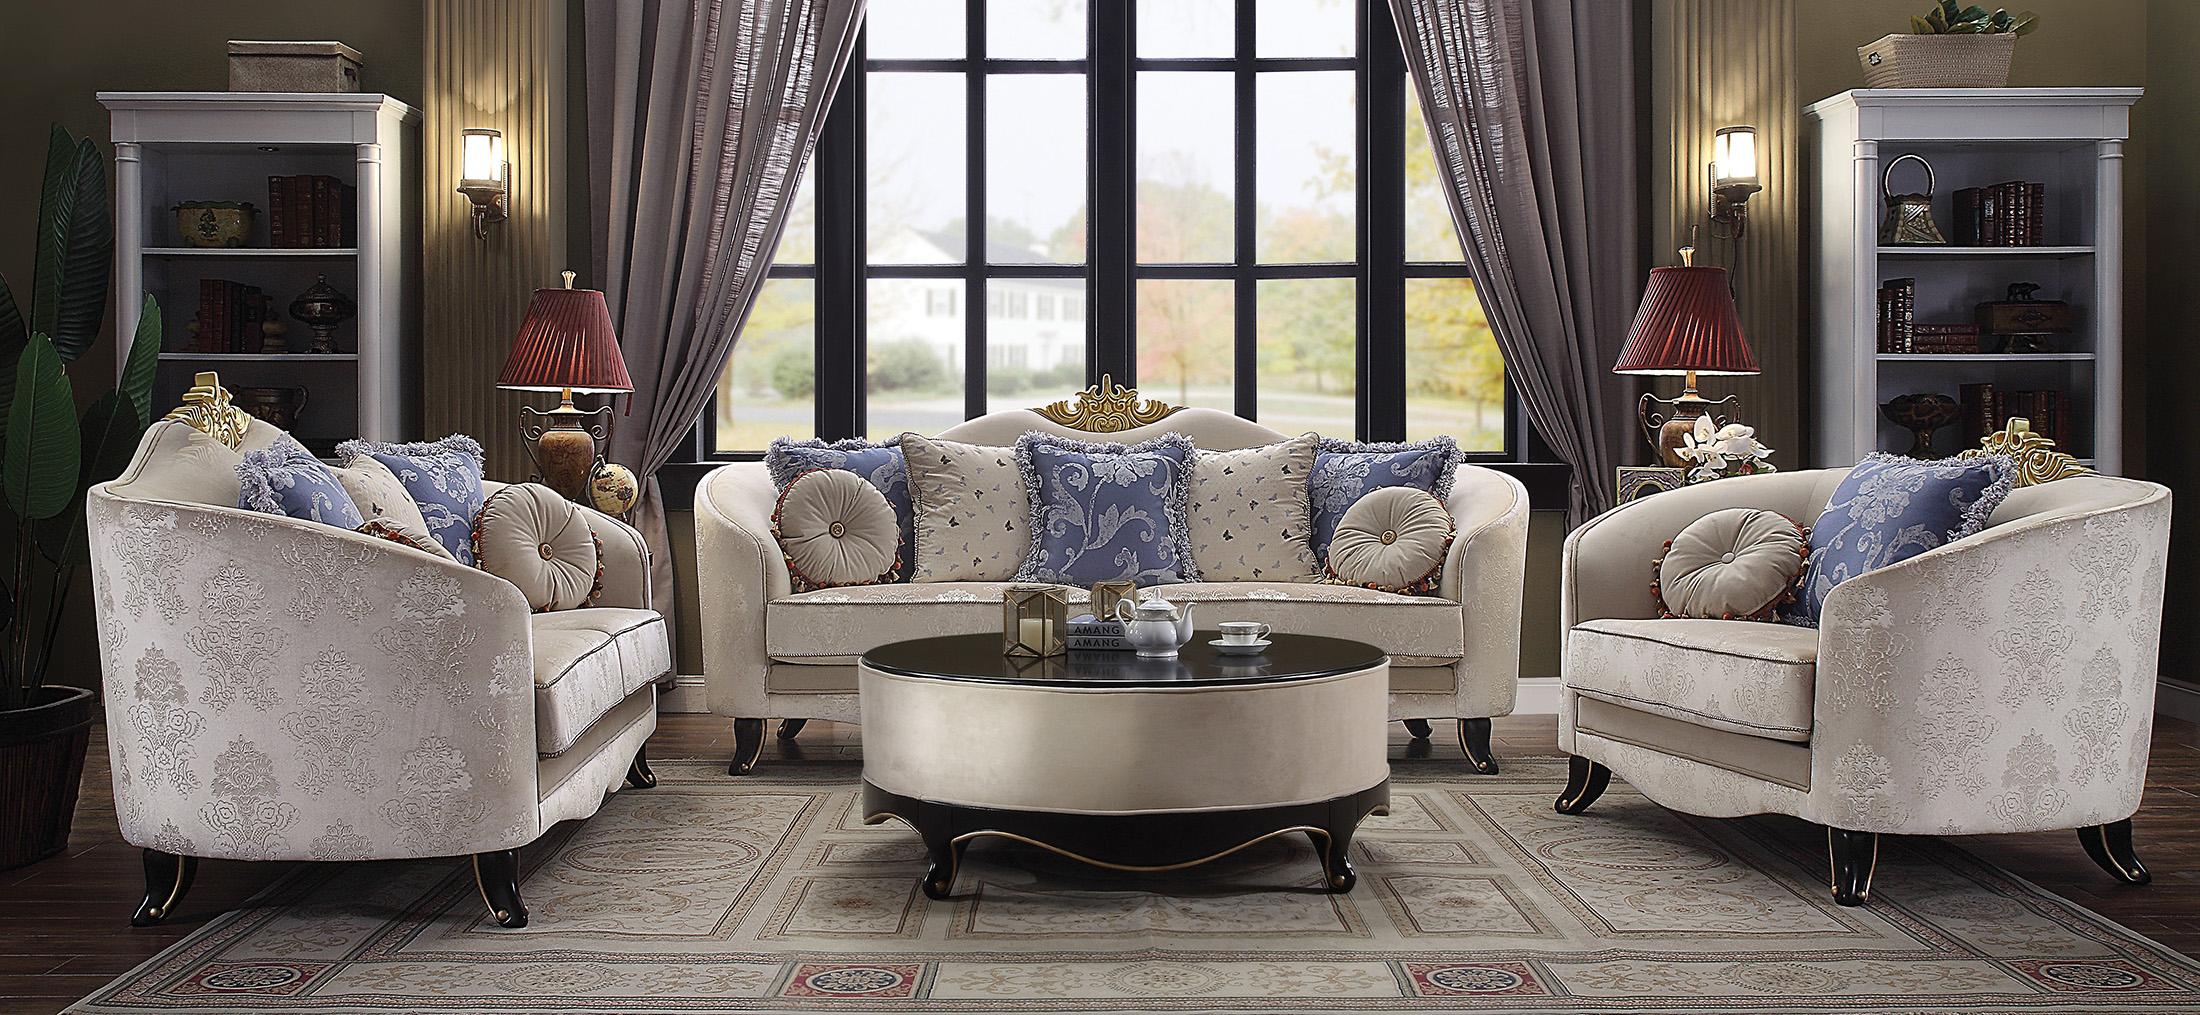 Classic, Traditional Sofa Loveseat Chair and Coffee Table Sheridan-53945 Sheridan-53945-Set-4 in Cream Fabric